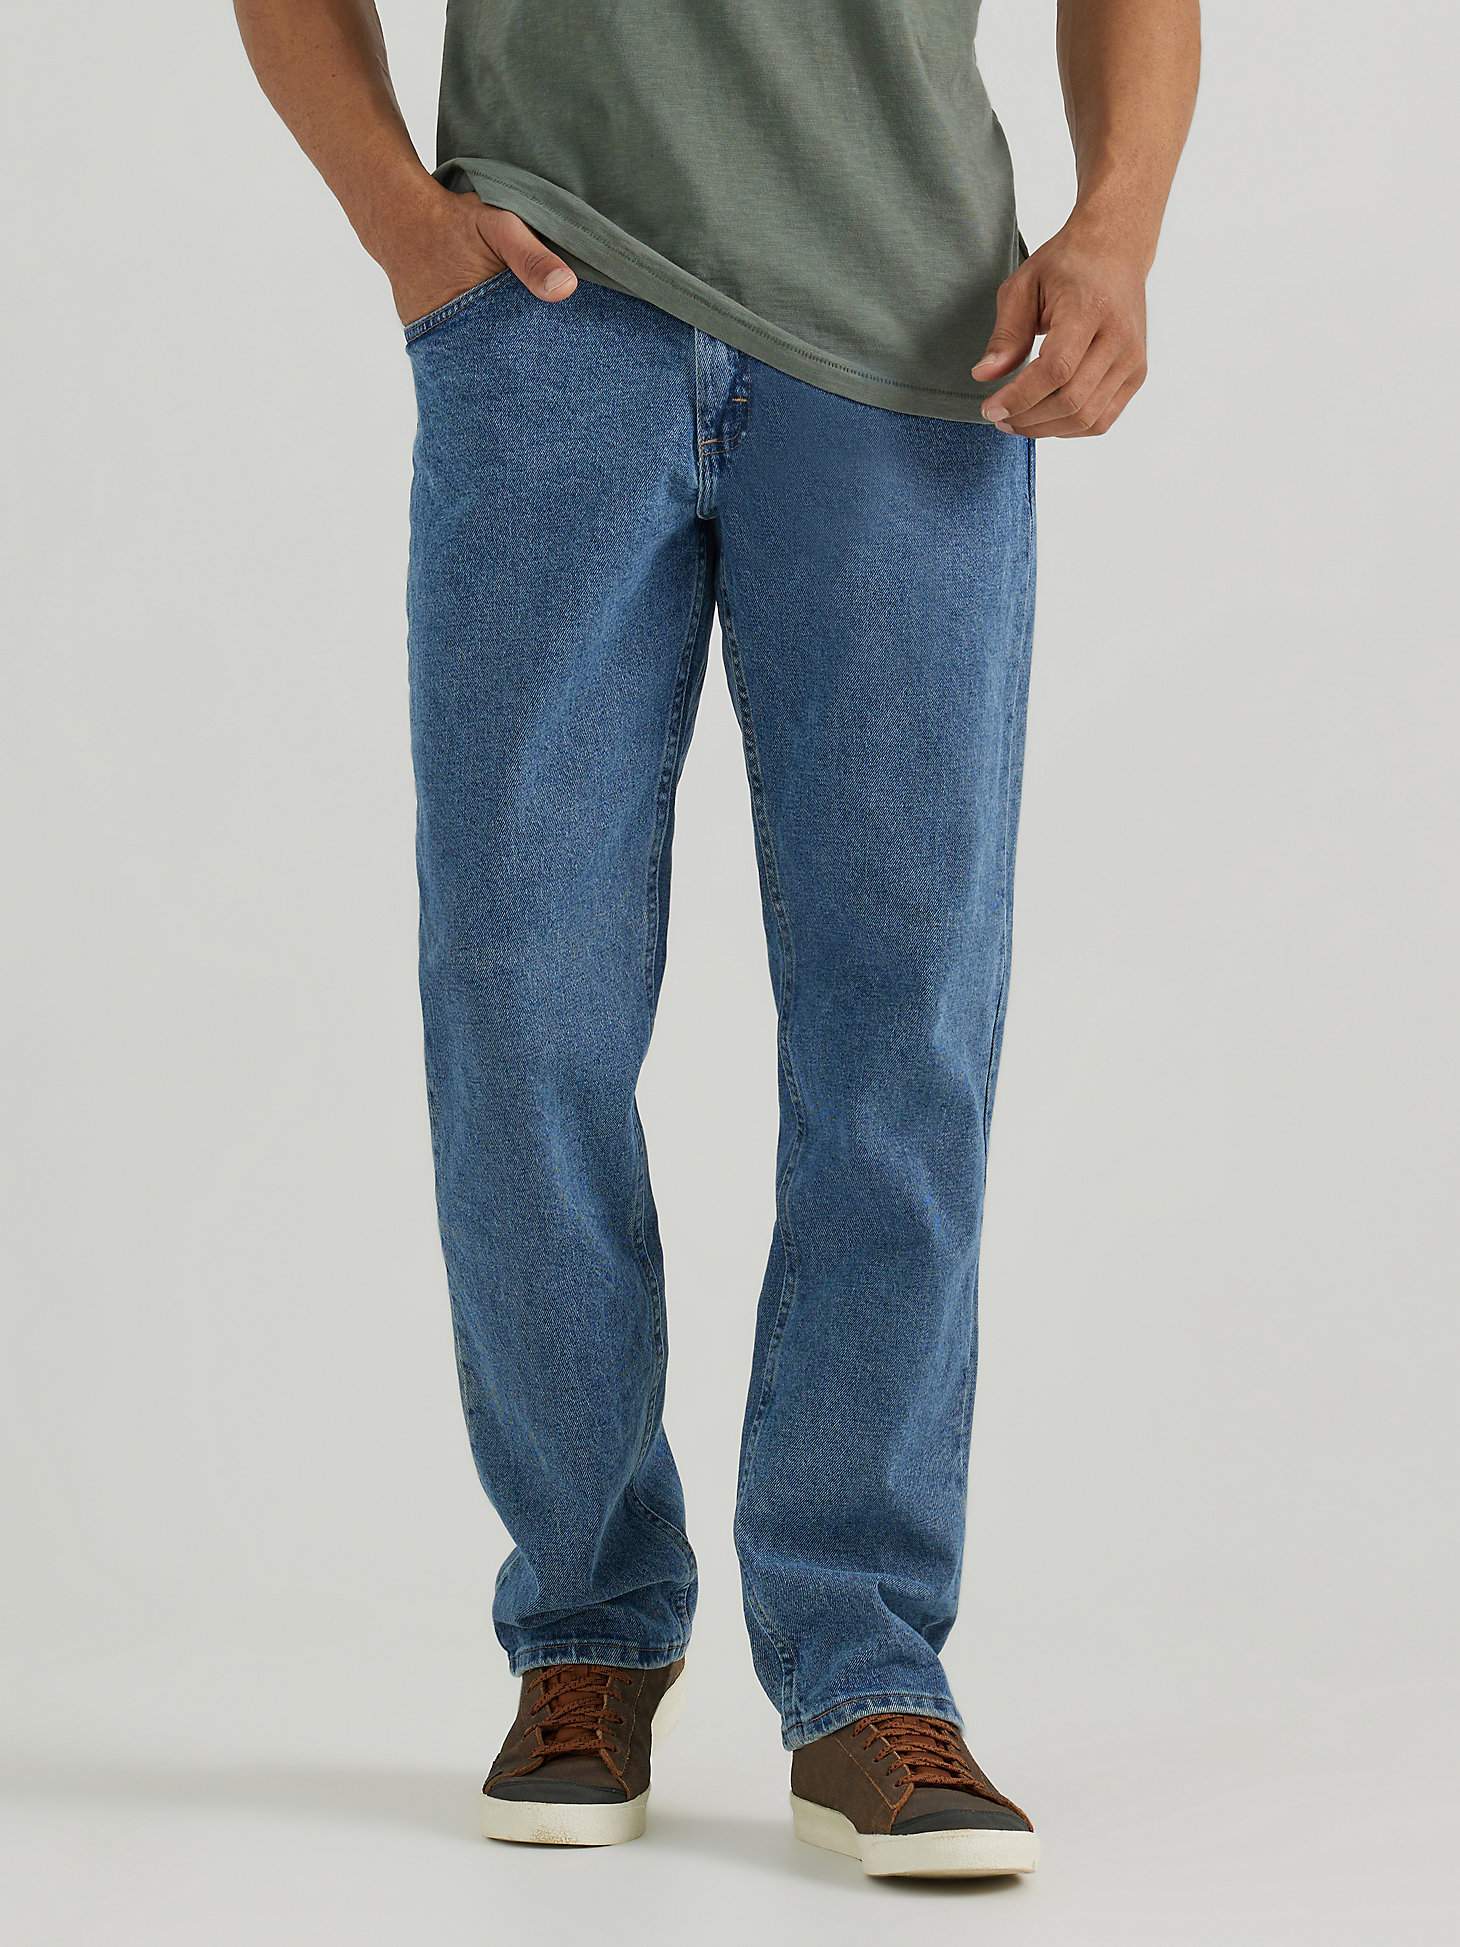 Men's Wrangler Authentics® Relaxed Fit Flex Jean in Vintage Blue main view